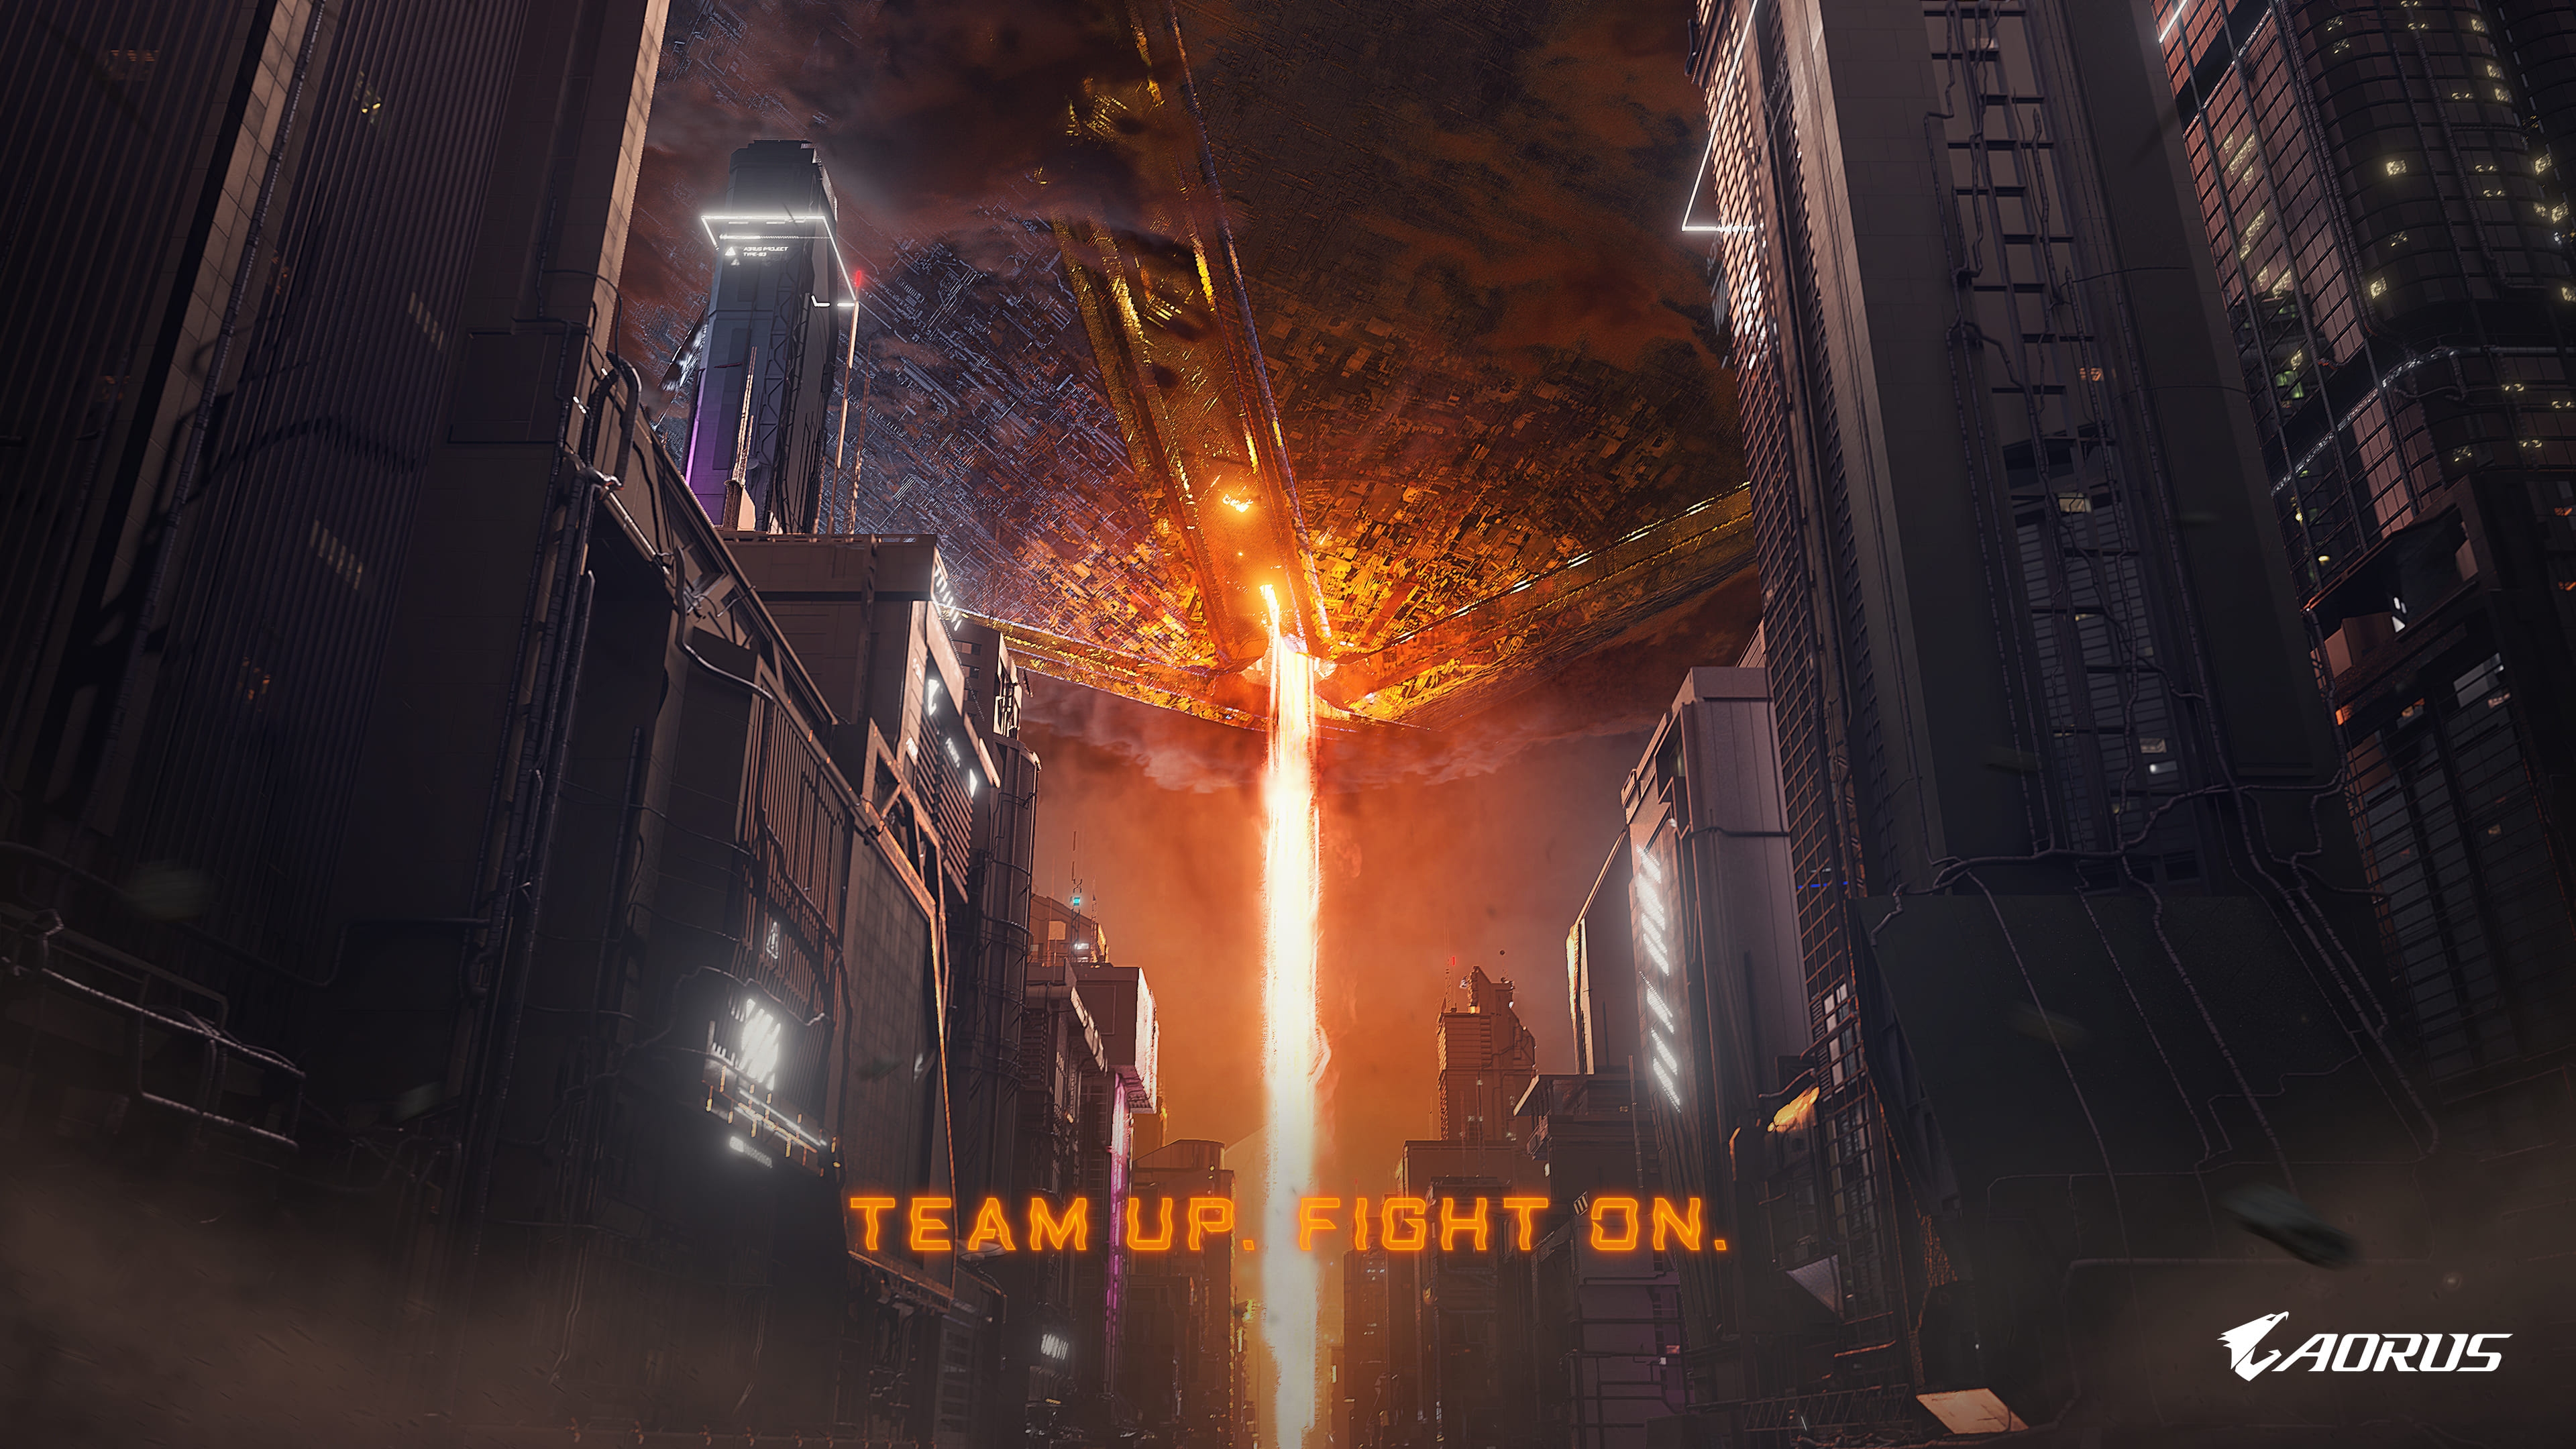 HD wallpaper, Gigabyte Aorus Gaming, Cyberpunk, Team Up Fight On